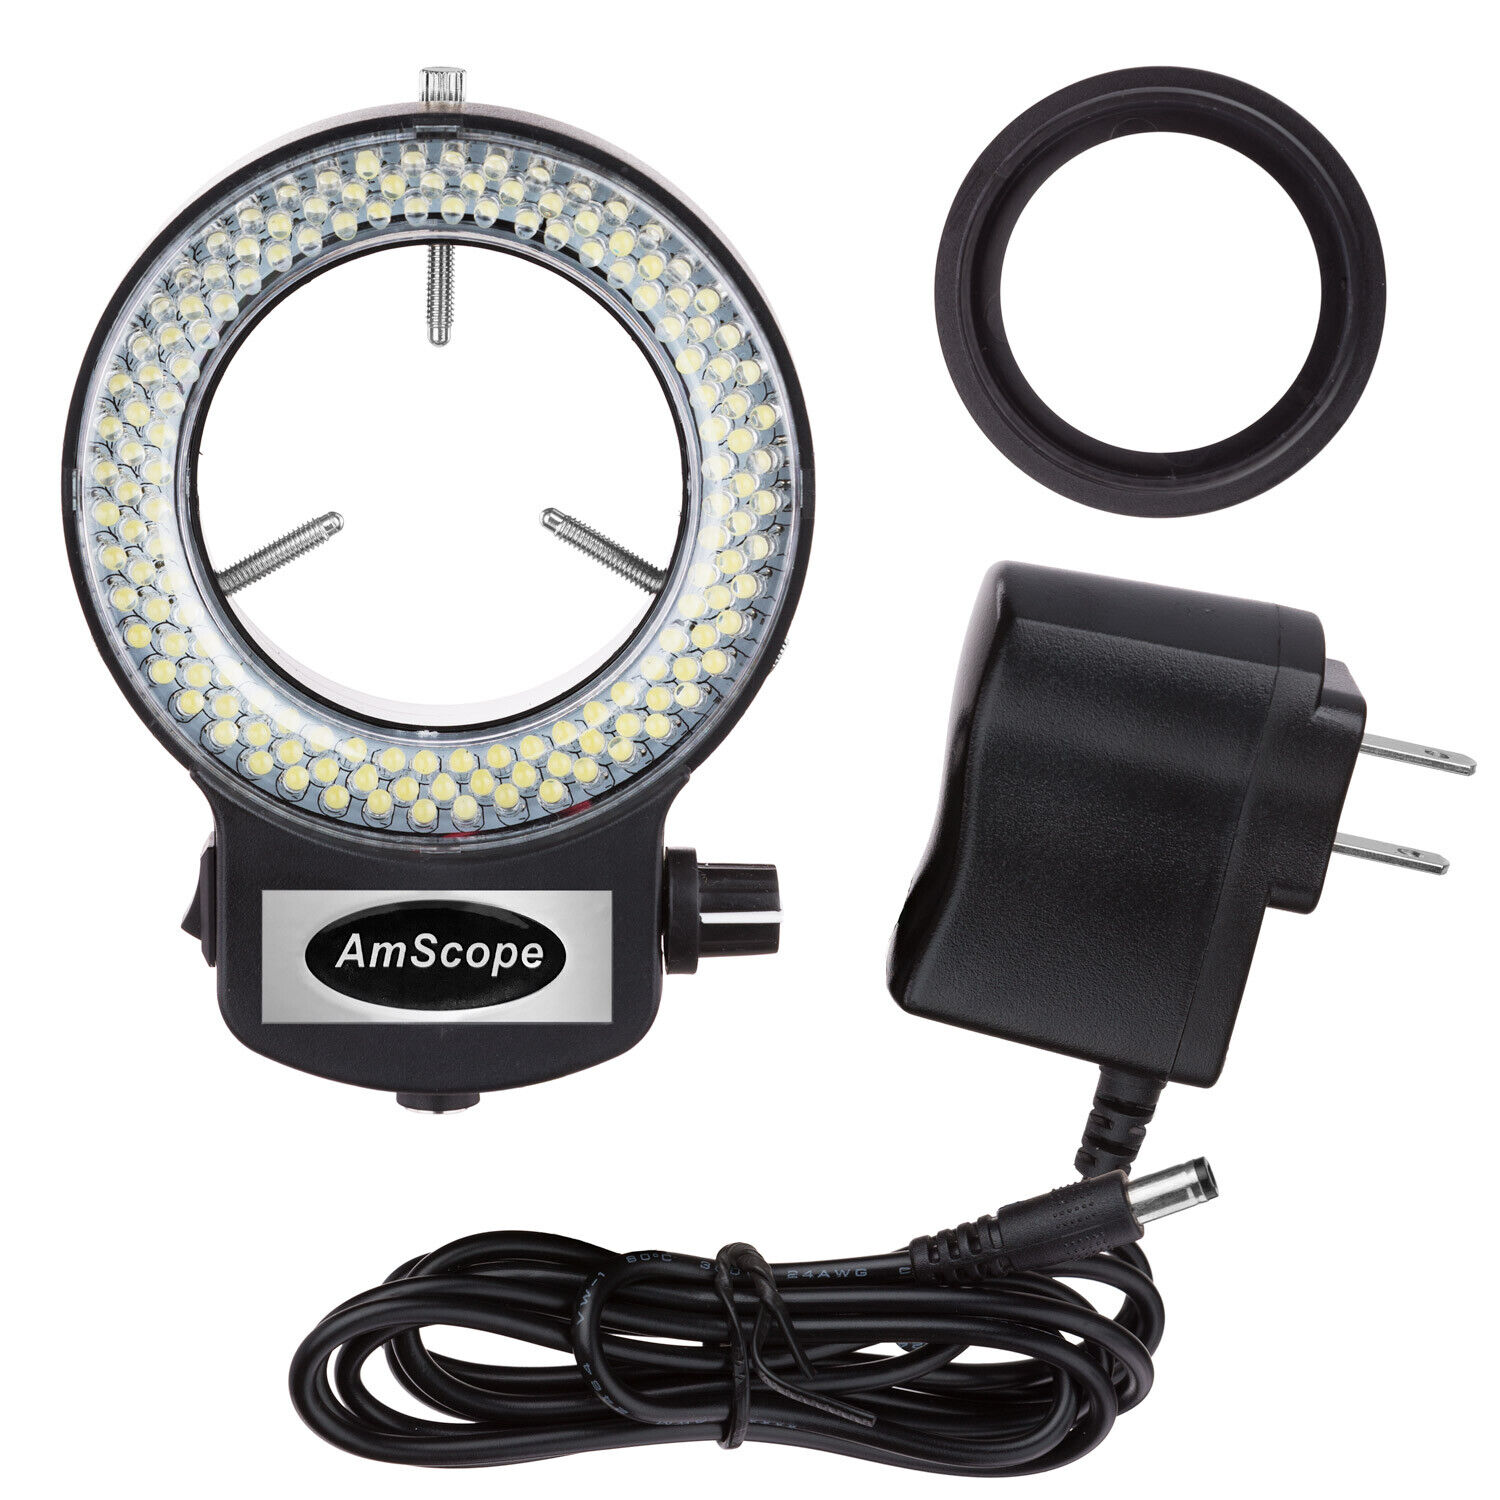 AmScope 144-LED Adjustable Compact Microscope Ring Light +Adapter w Black Finish